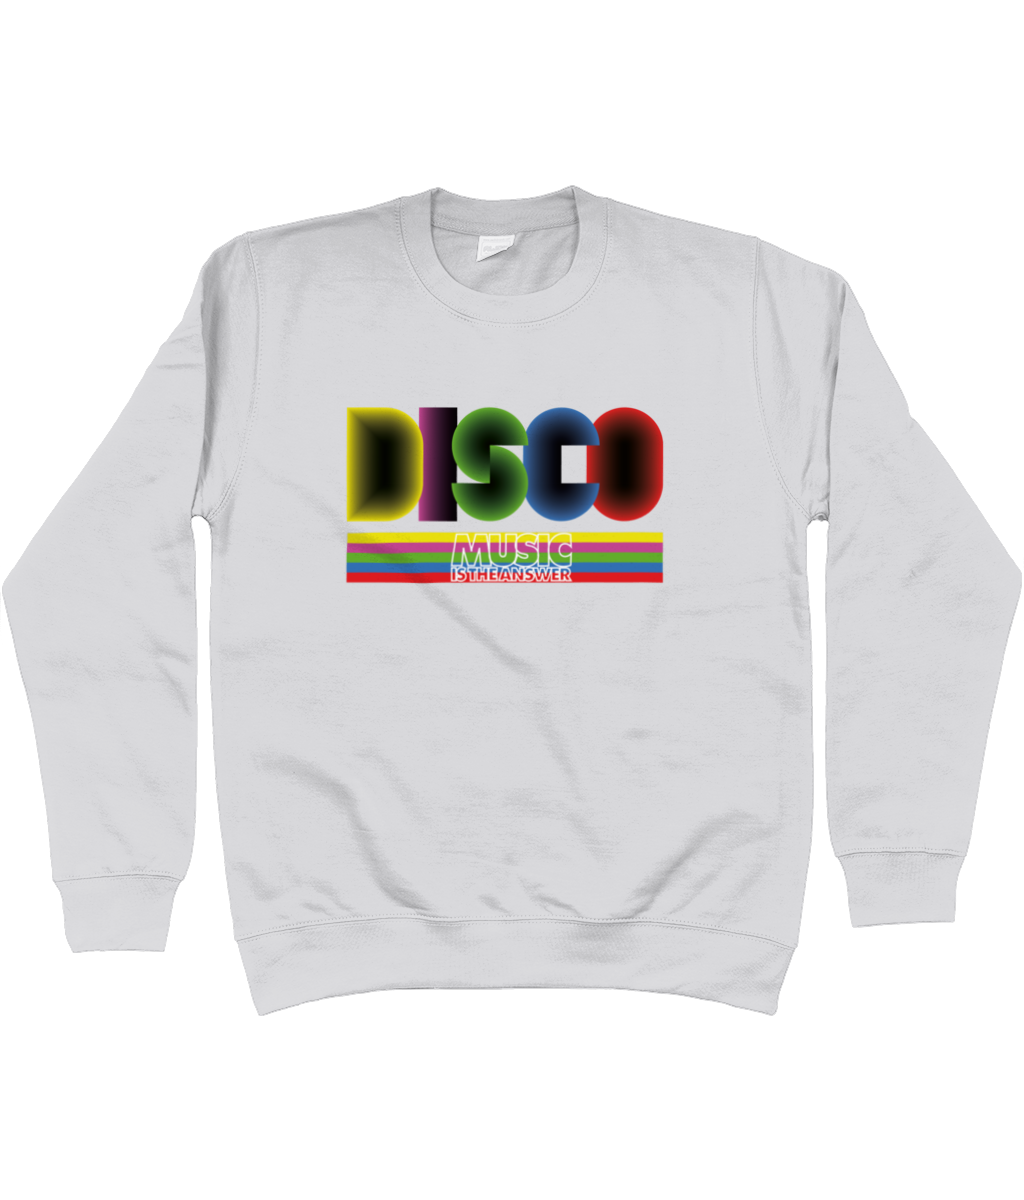 Sweatshirt Disco